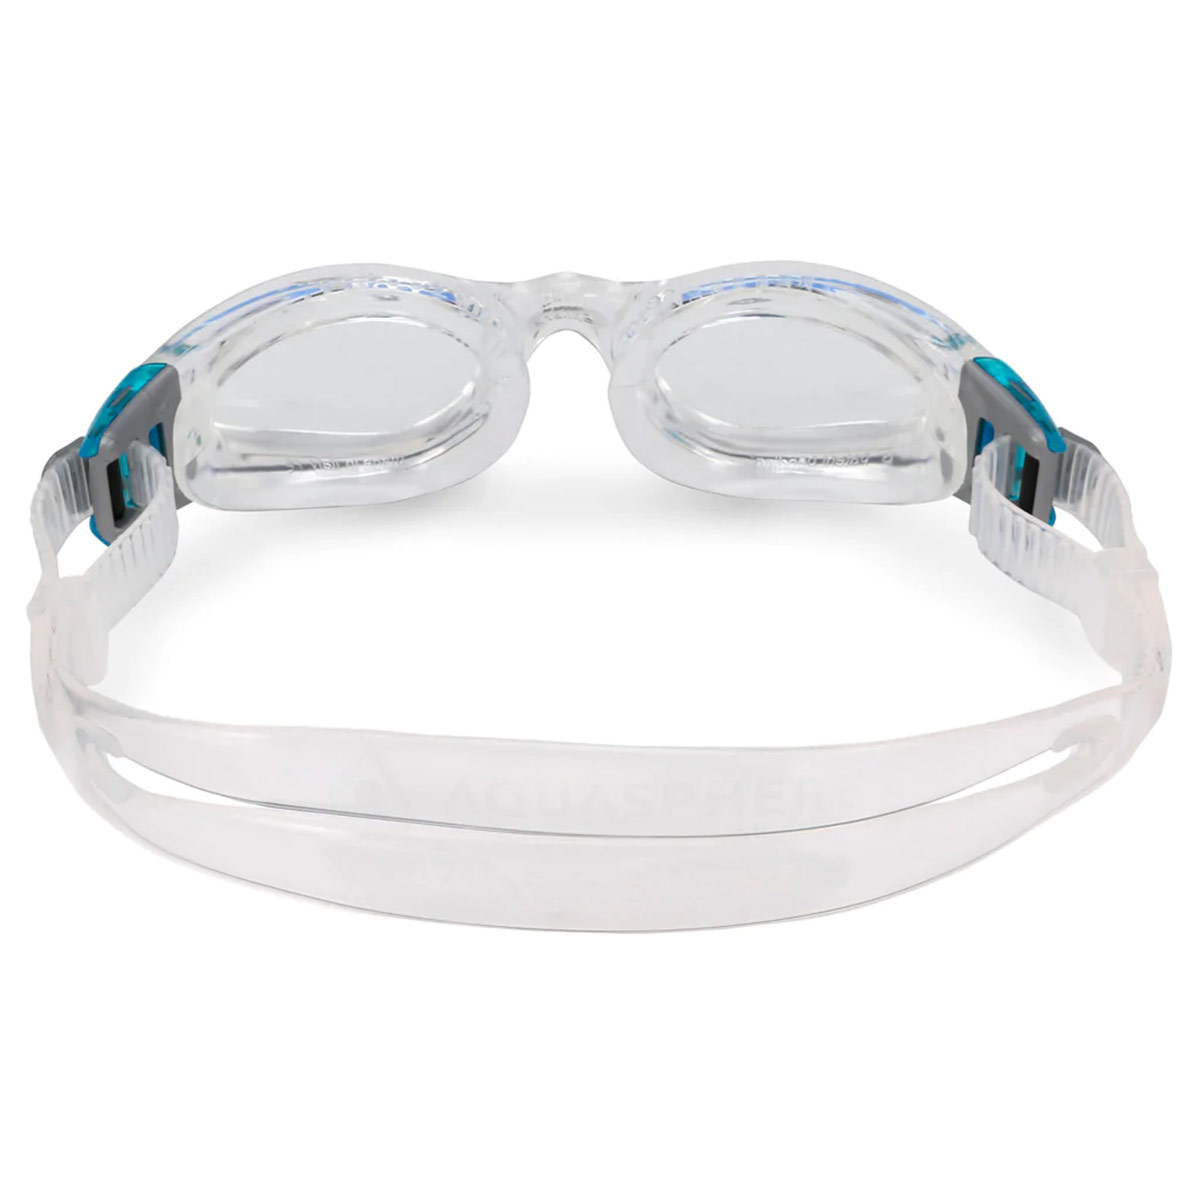 Aqua Sphere - Kaiman Compact Clear Lens Goggles - Transparent/Bleu